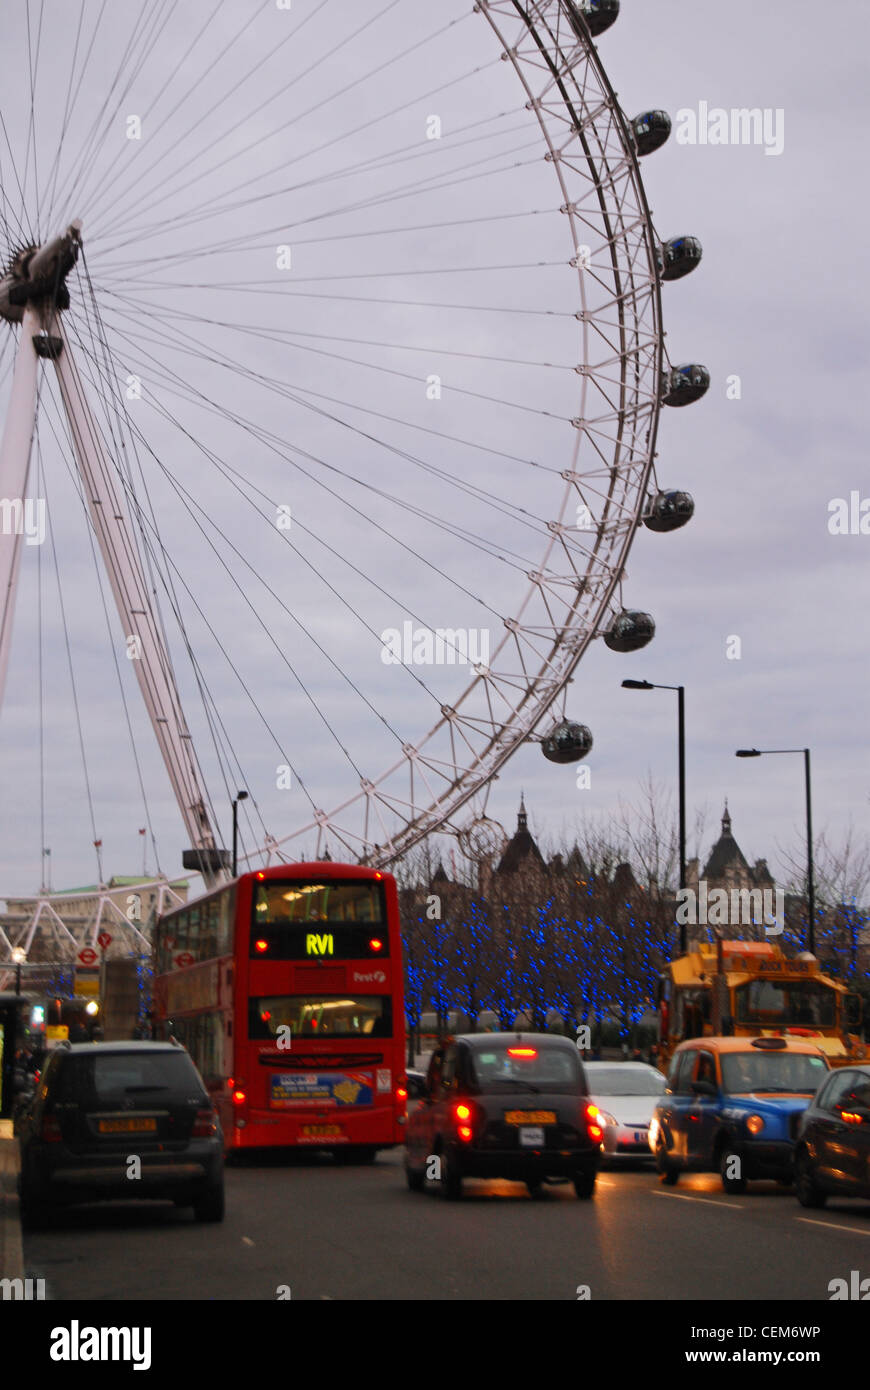 London Eye - sightseeing London, United Kingdom - popular tourist location - giant ferris wheel - at river thames Stock Photo